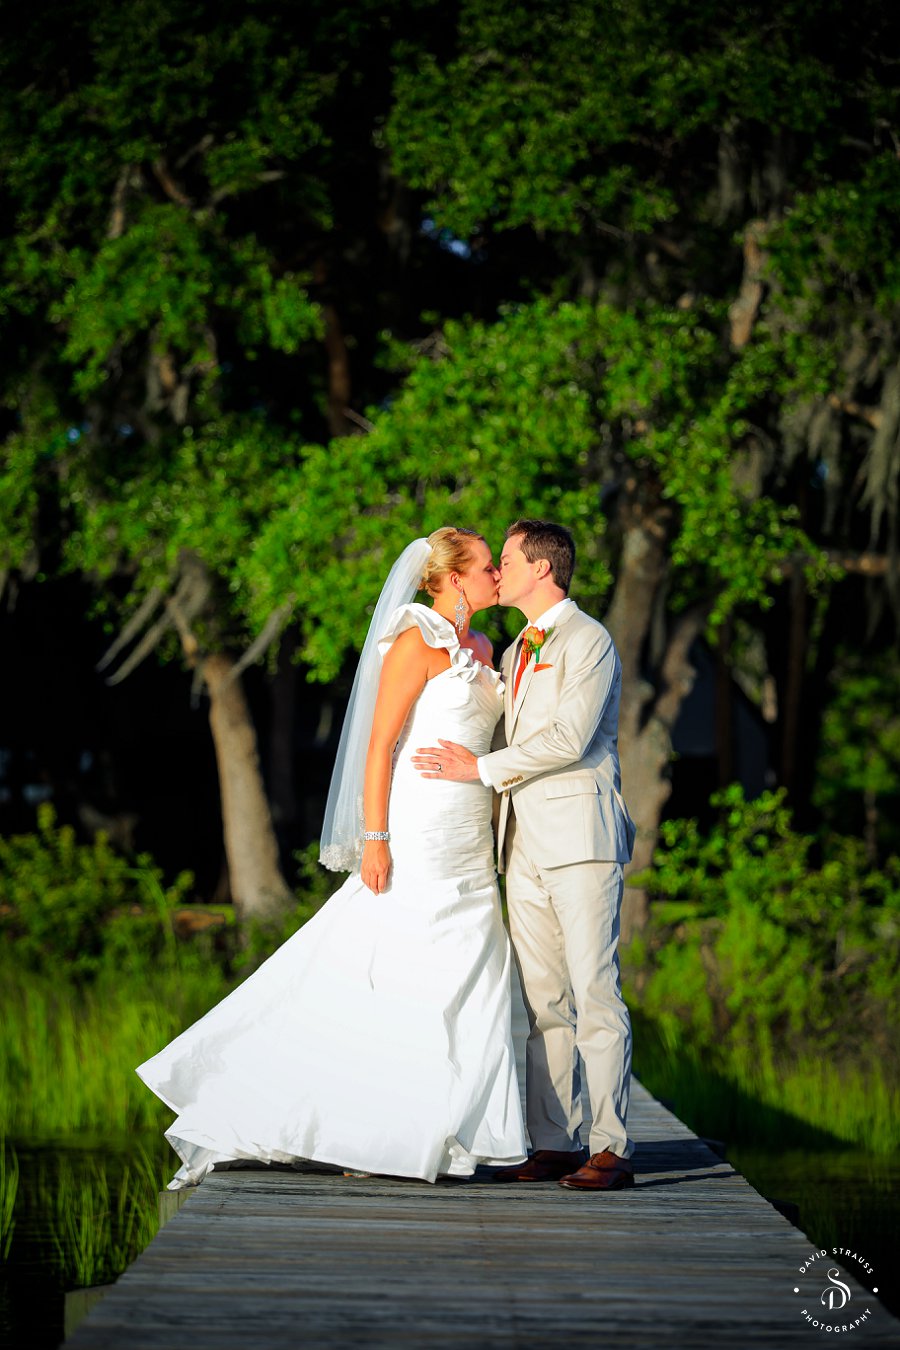 Charleston Wedding Photography - River Oaks Venue - Photographer David Strauss - 30